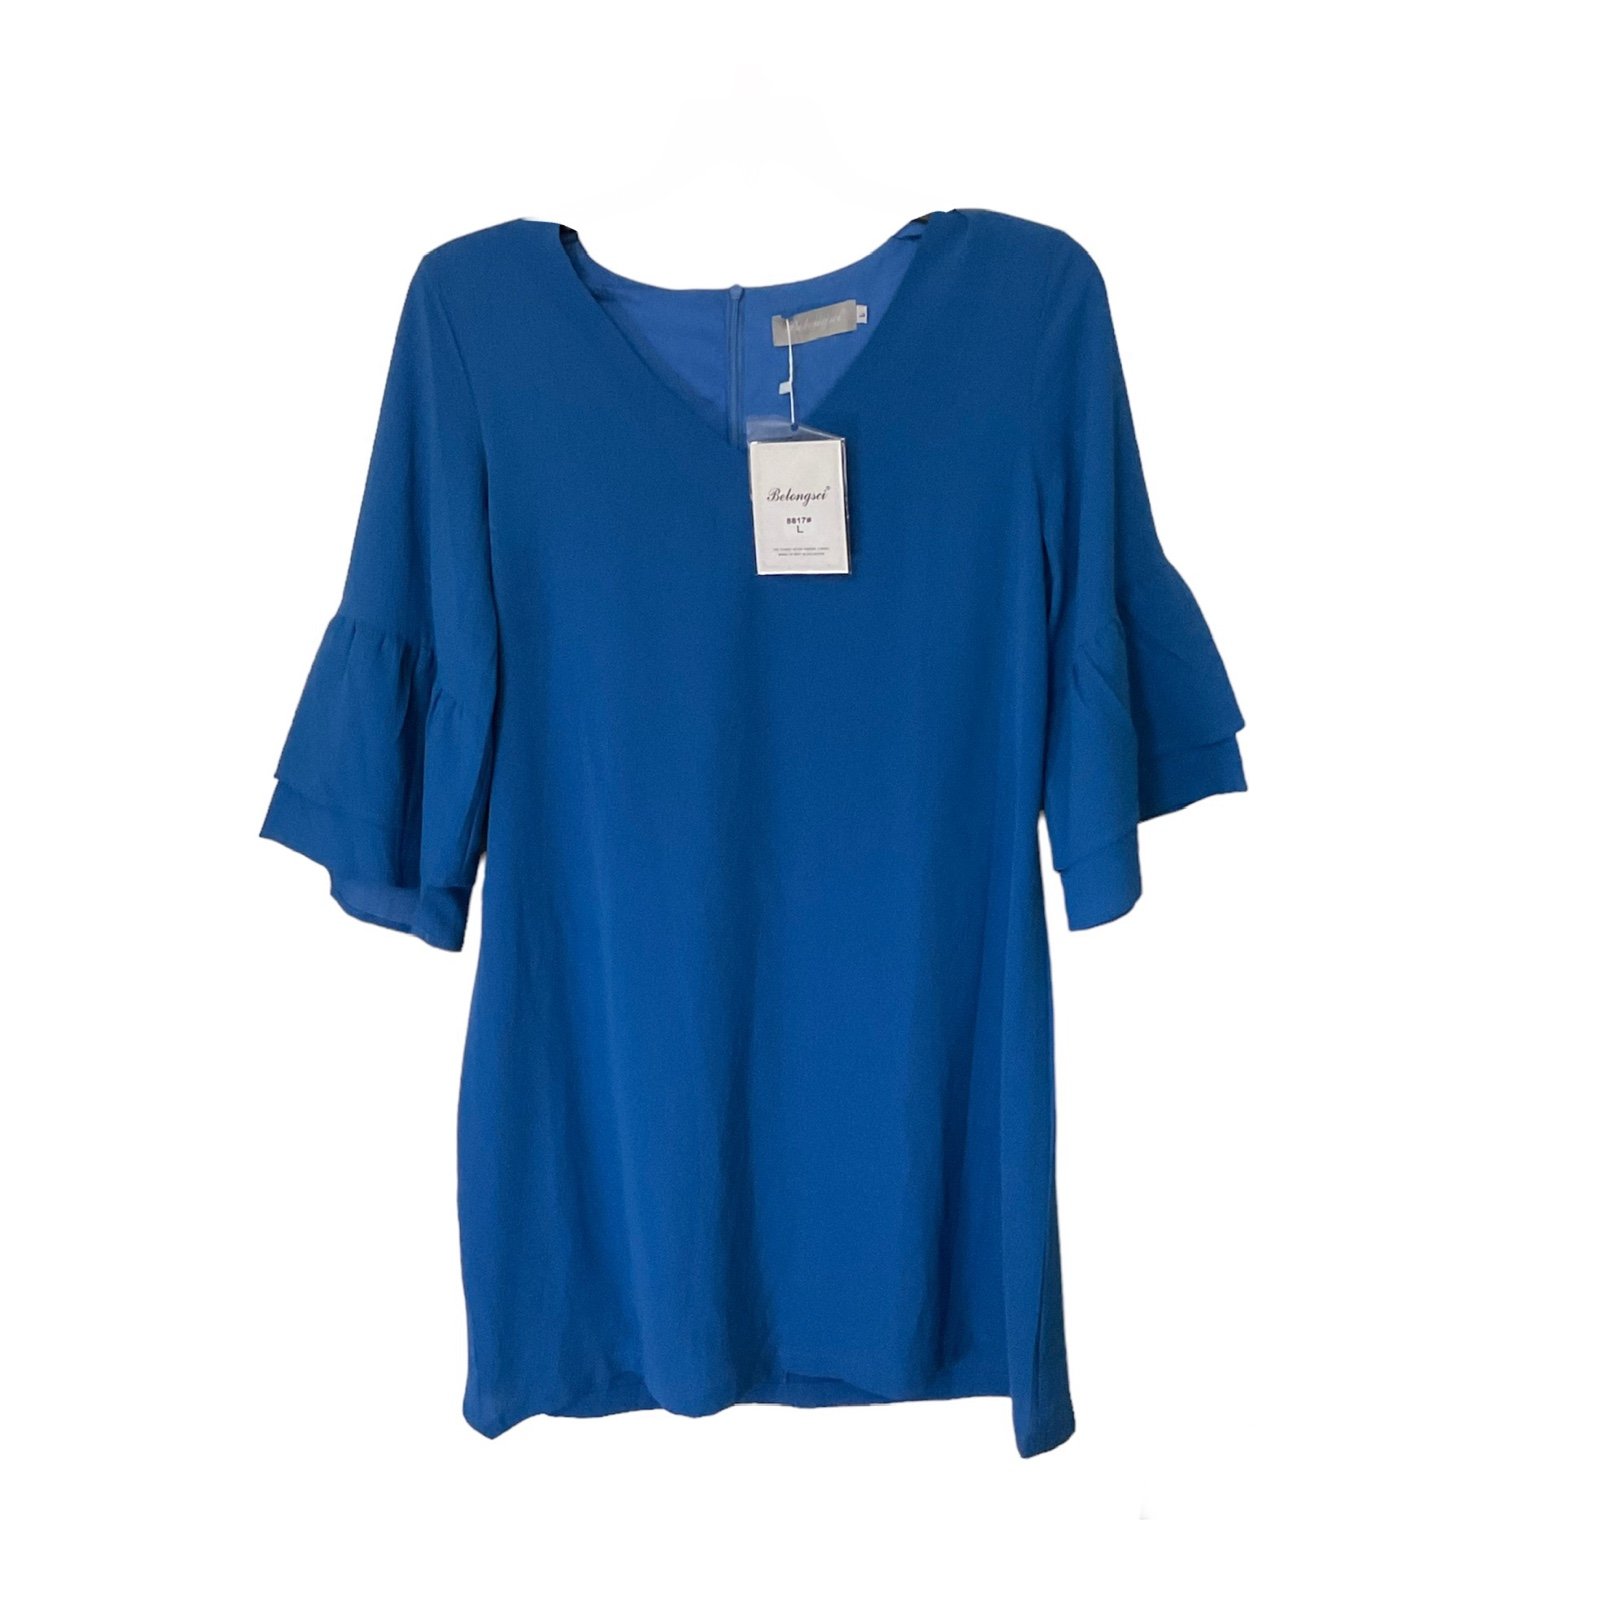 Affordable Belongsci shift dress blue sz Large v-neck b